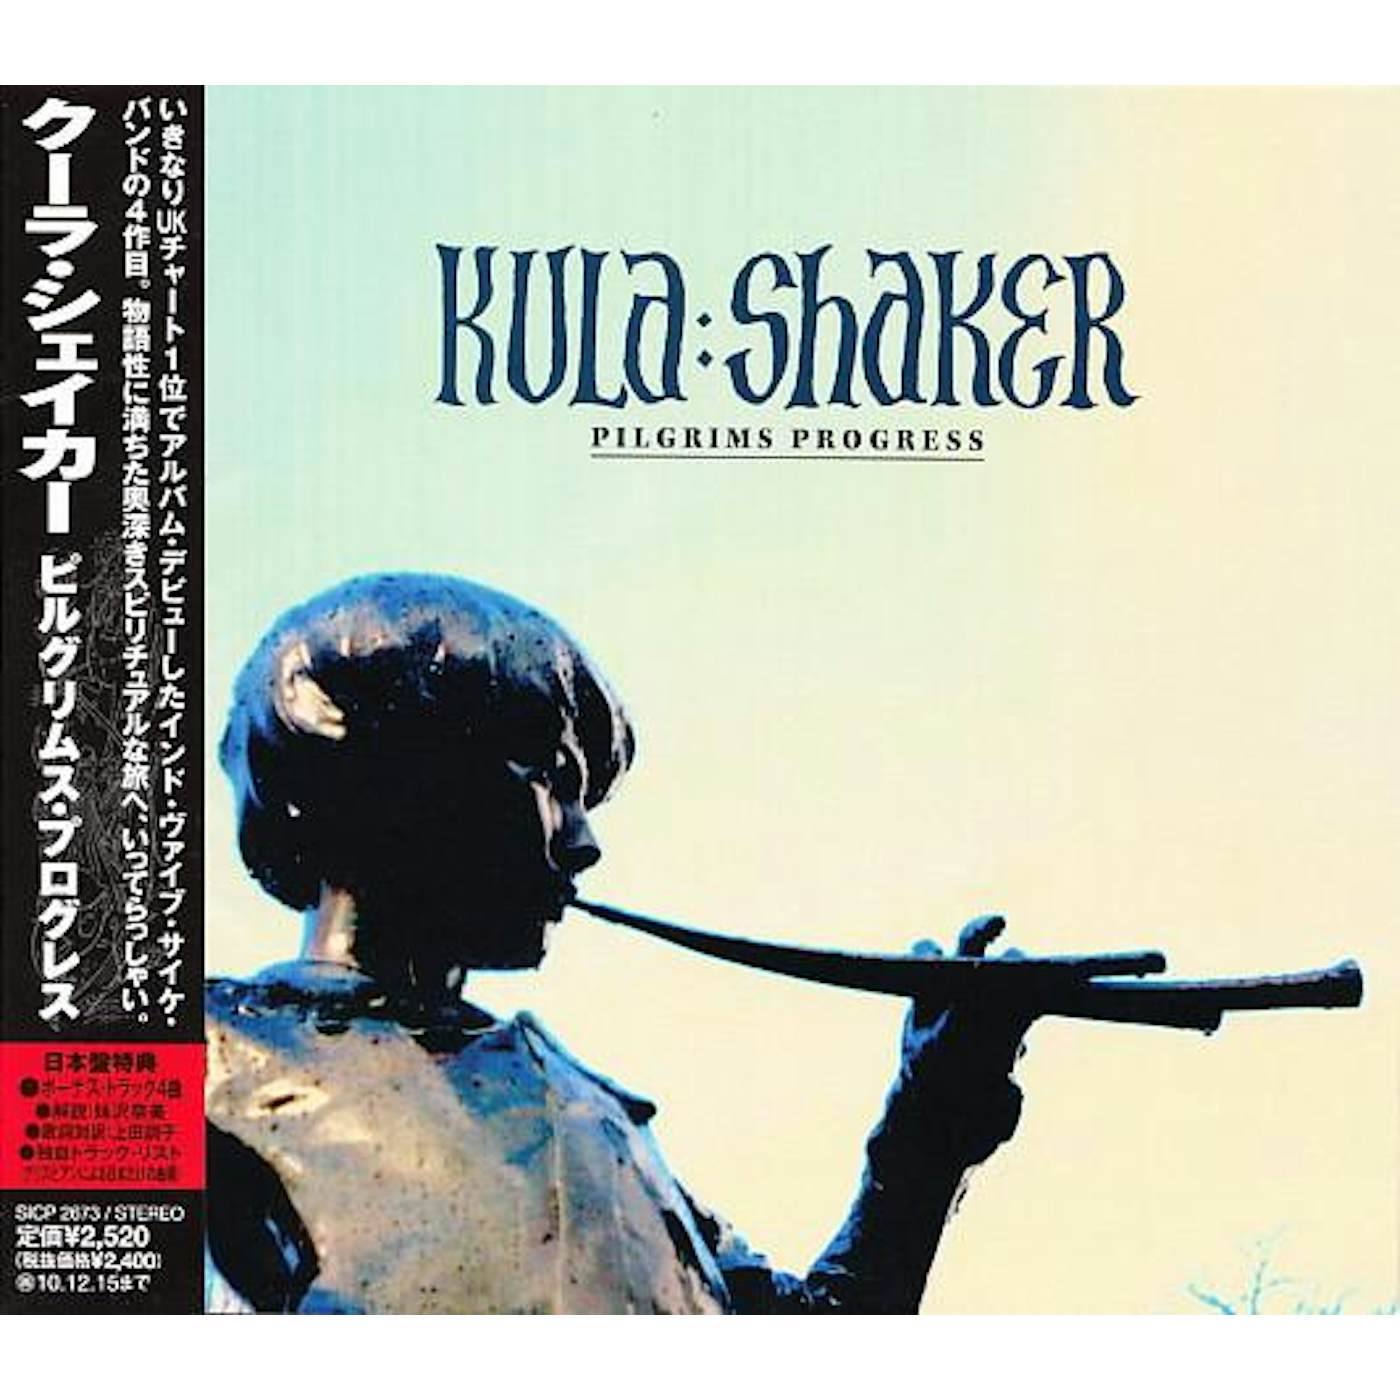 Kula Shaker PILGRIMS PROGRESS CD